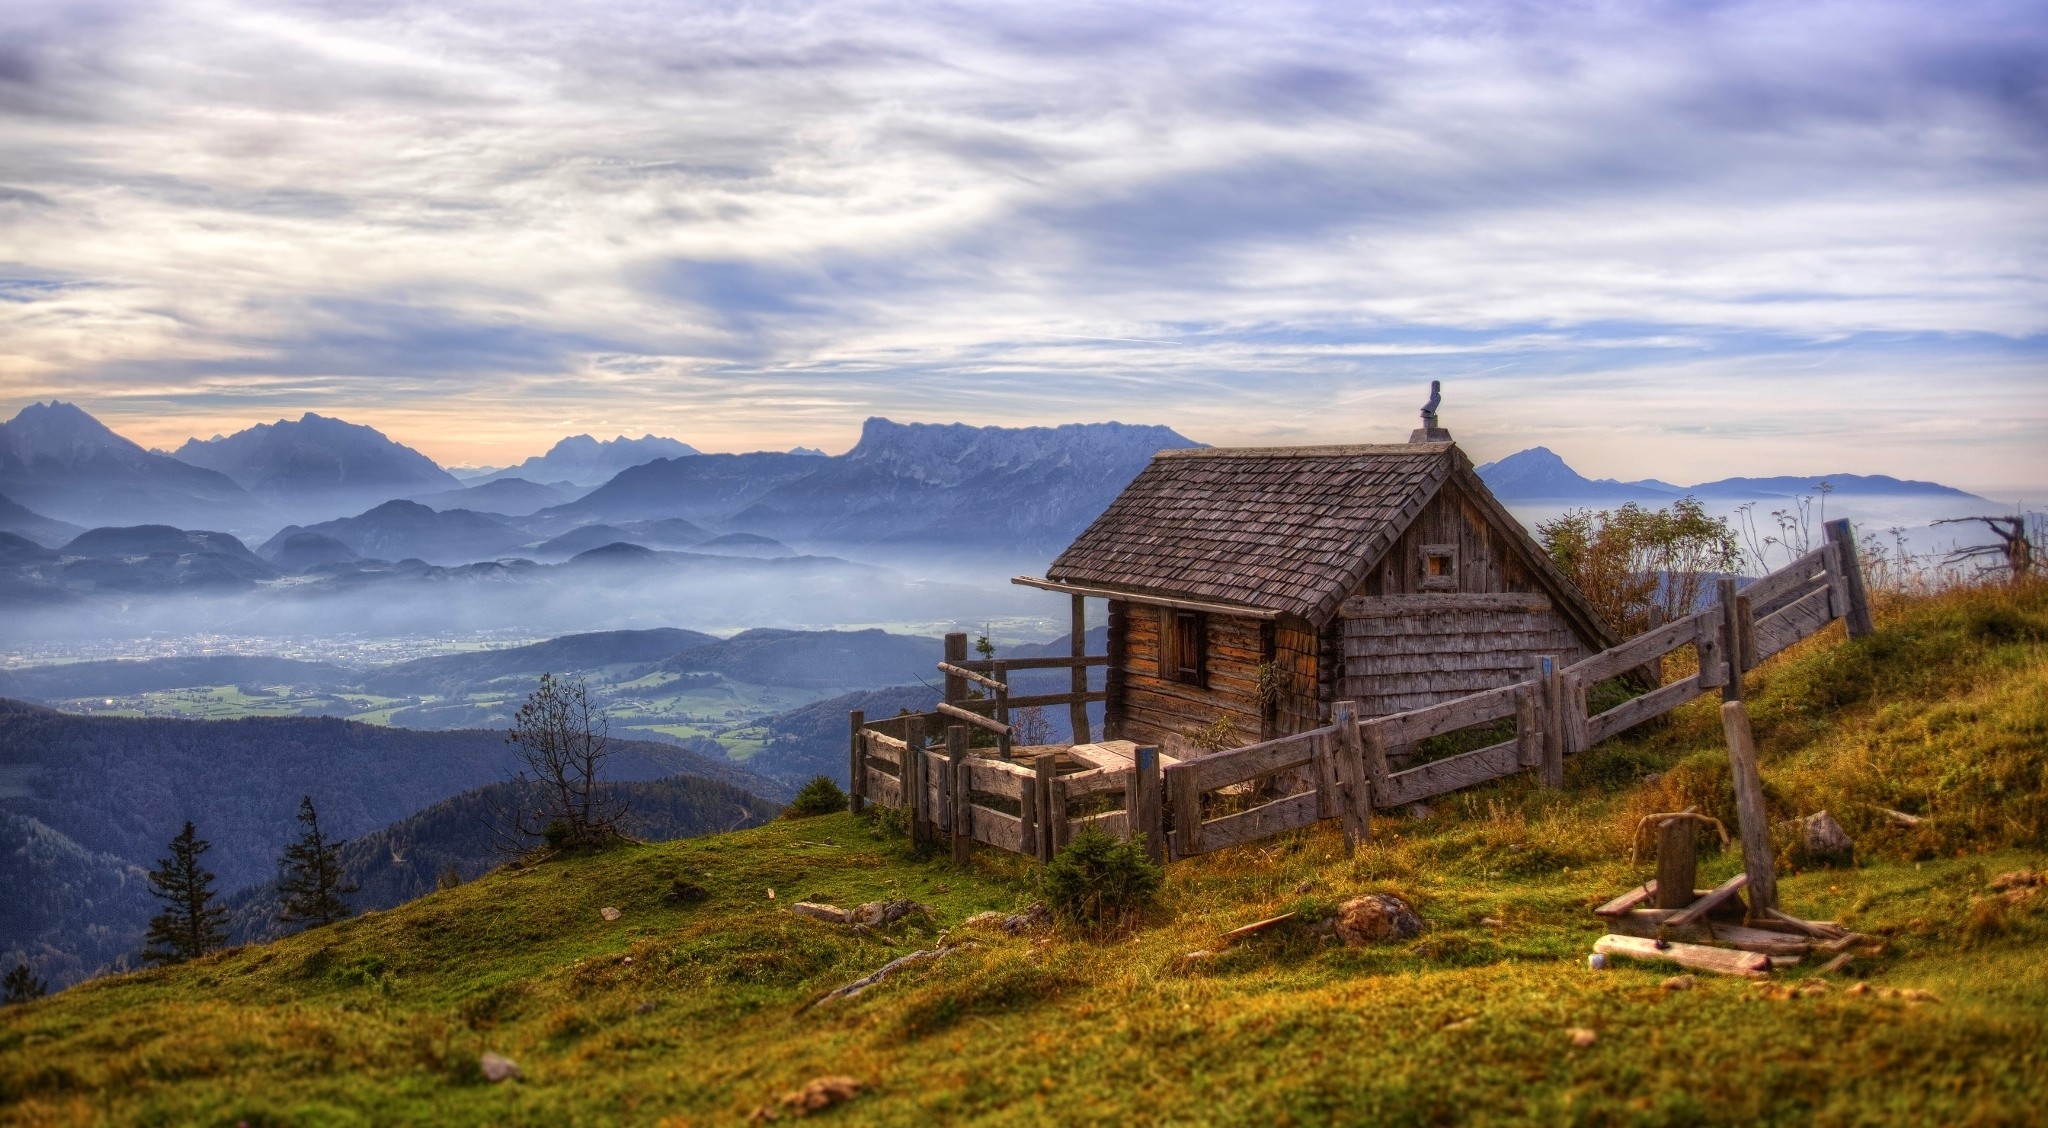 General 2048x1128 nature landscape mist mountains cabin cottage fence valley grass clouds Salzburg Austria